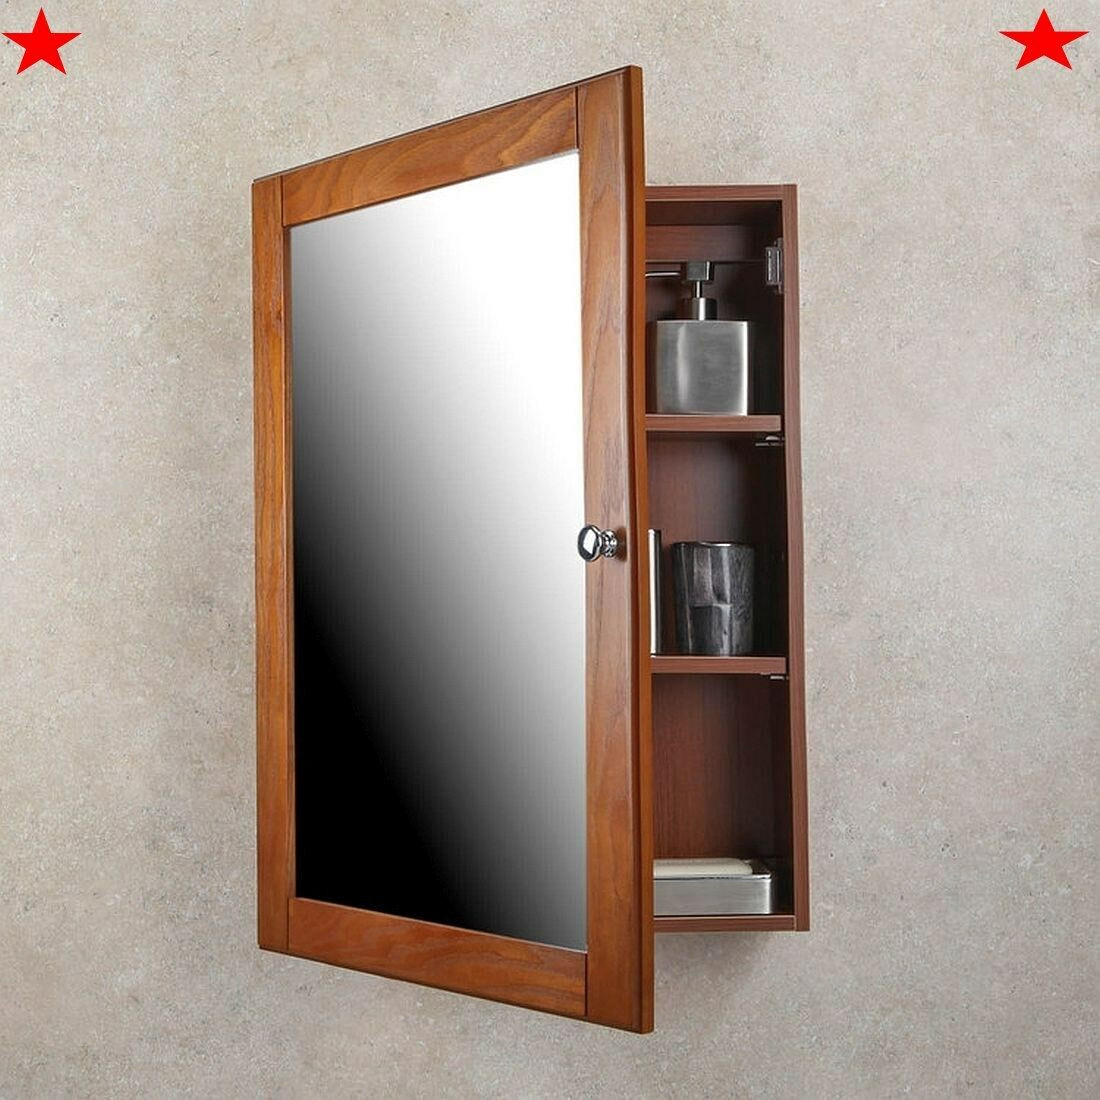 Mirrored Bathroom Medicine Cabinet
 MEDICINE CABINET Oak Finish Single Framed Mirror Door